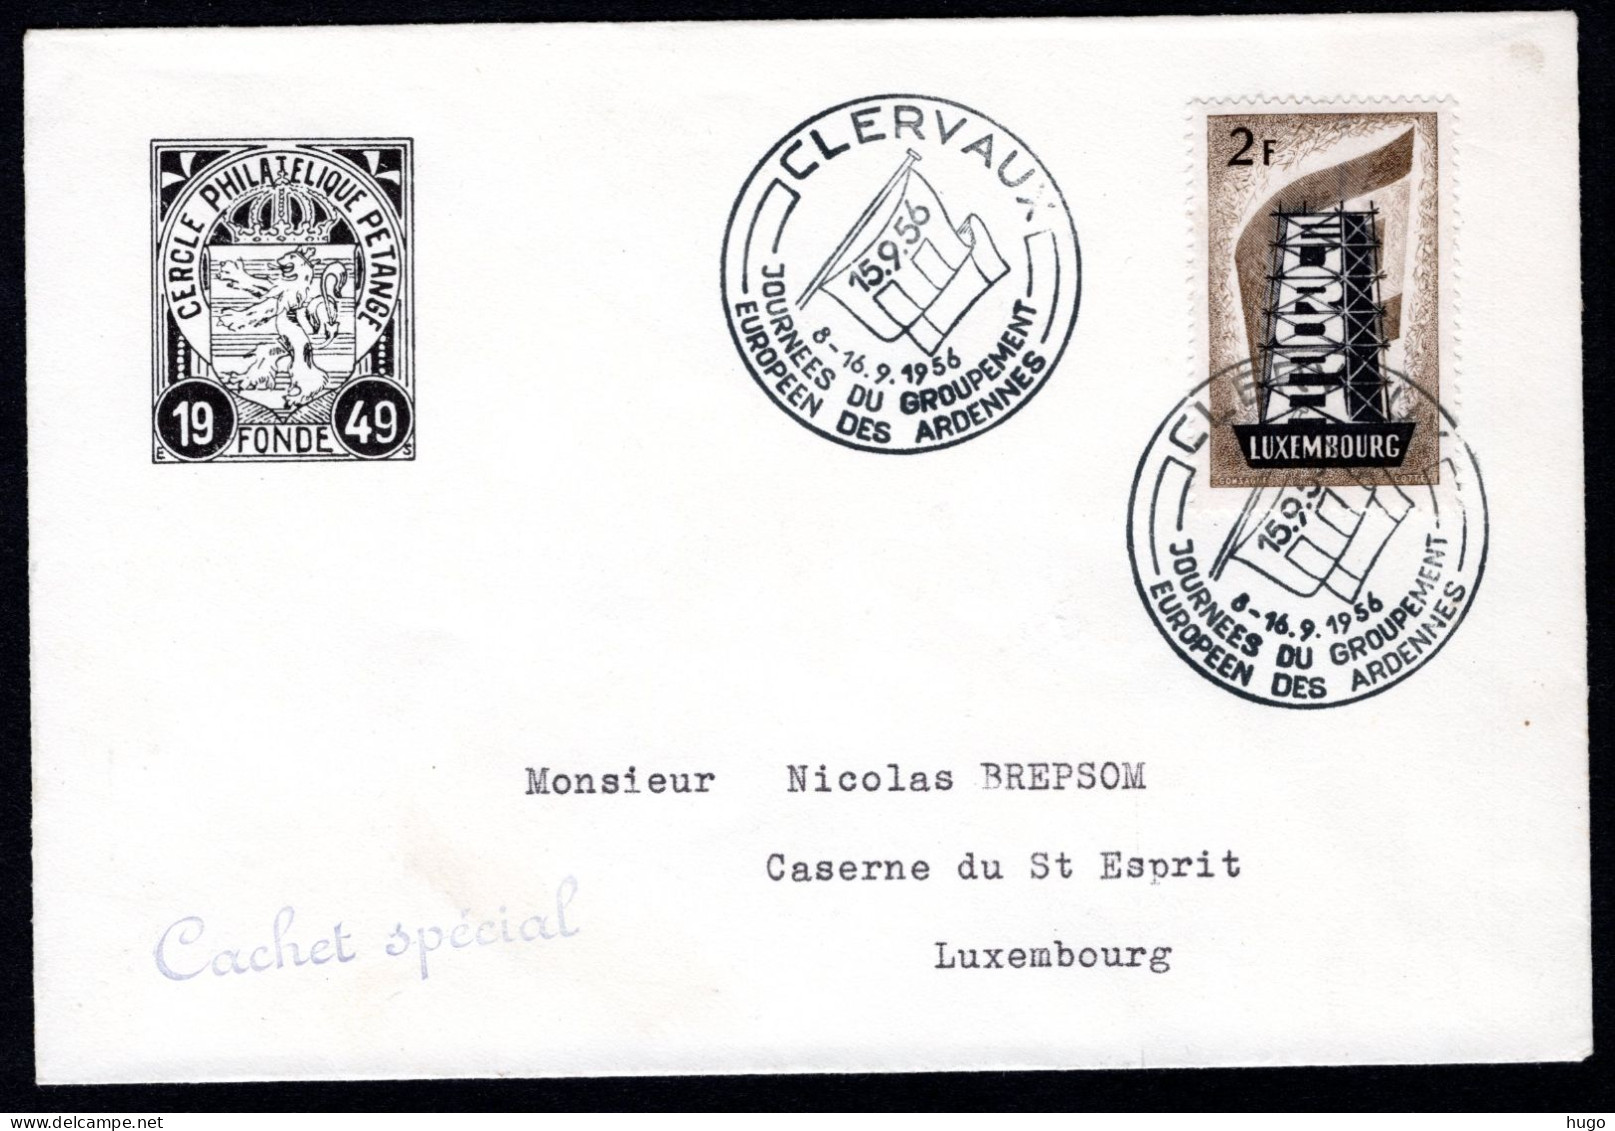 LUXEMBURG Yt. 514 FDC 1956 - EUROPA - Briefe U. Dokumente